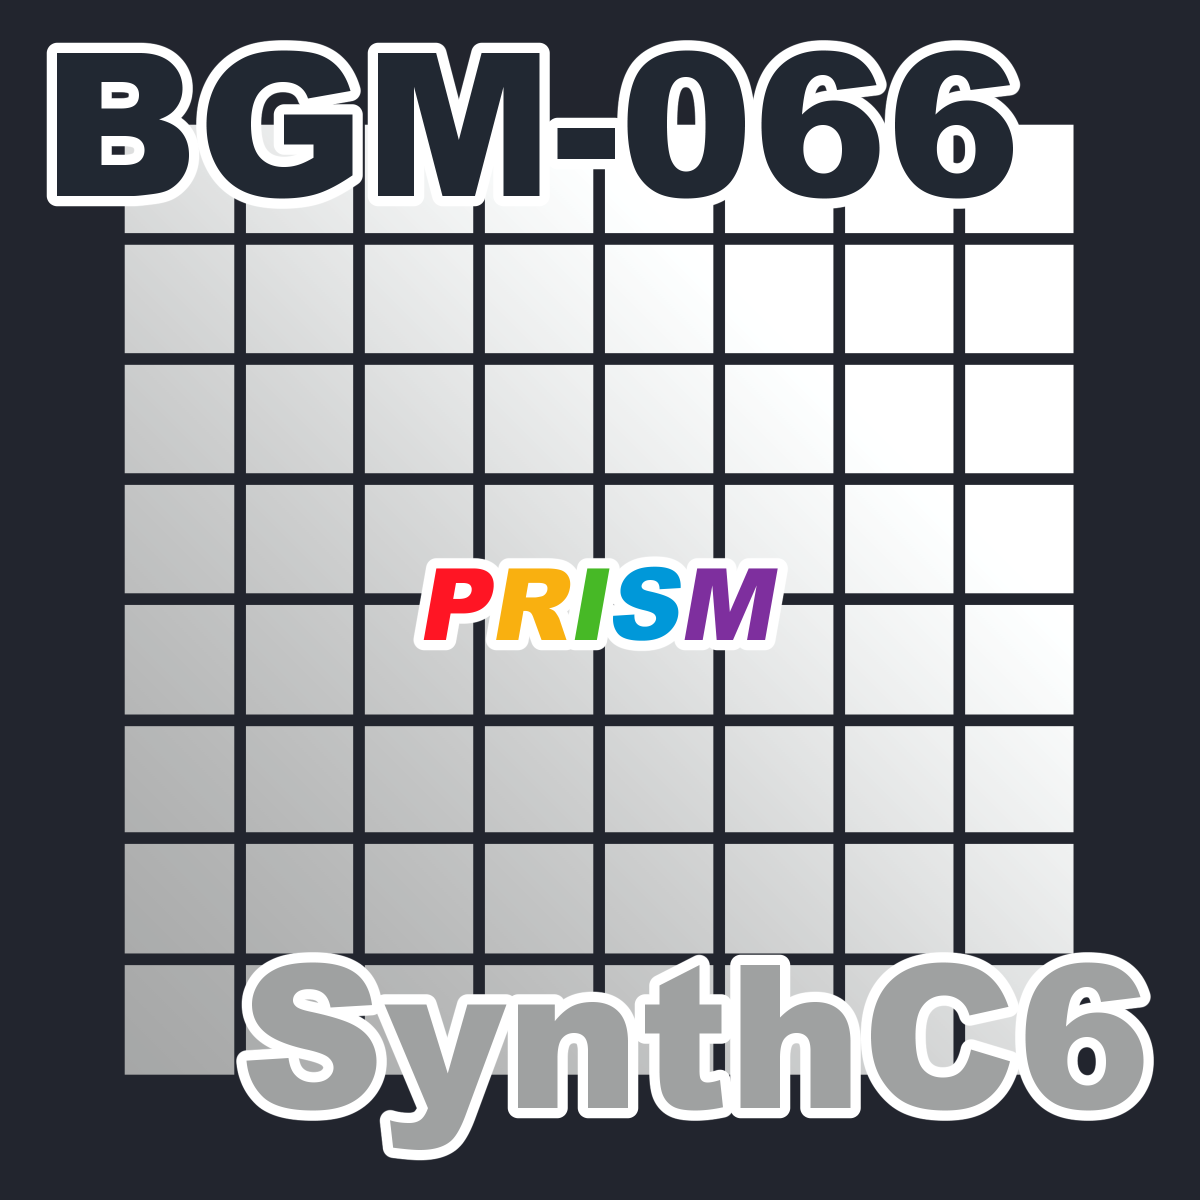 BGM-066 SynthC6 -Short ver.-